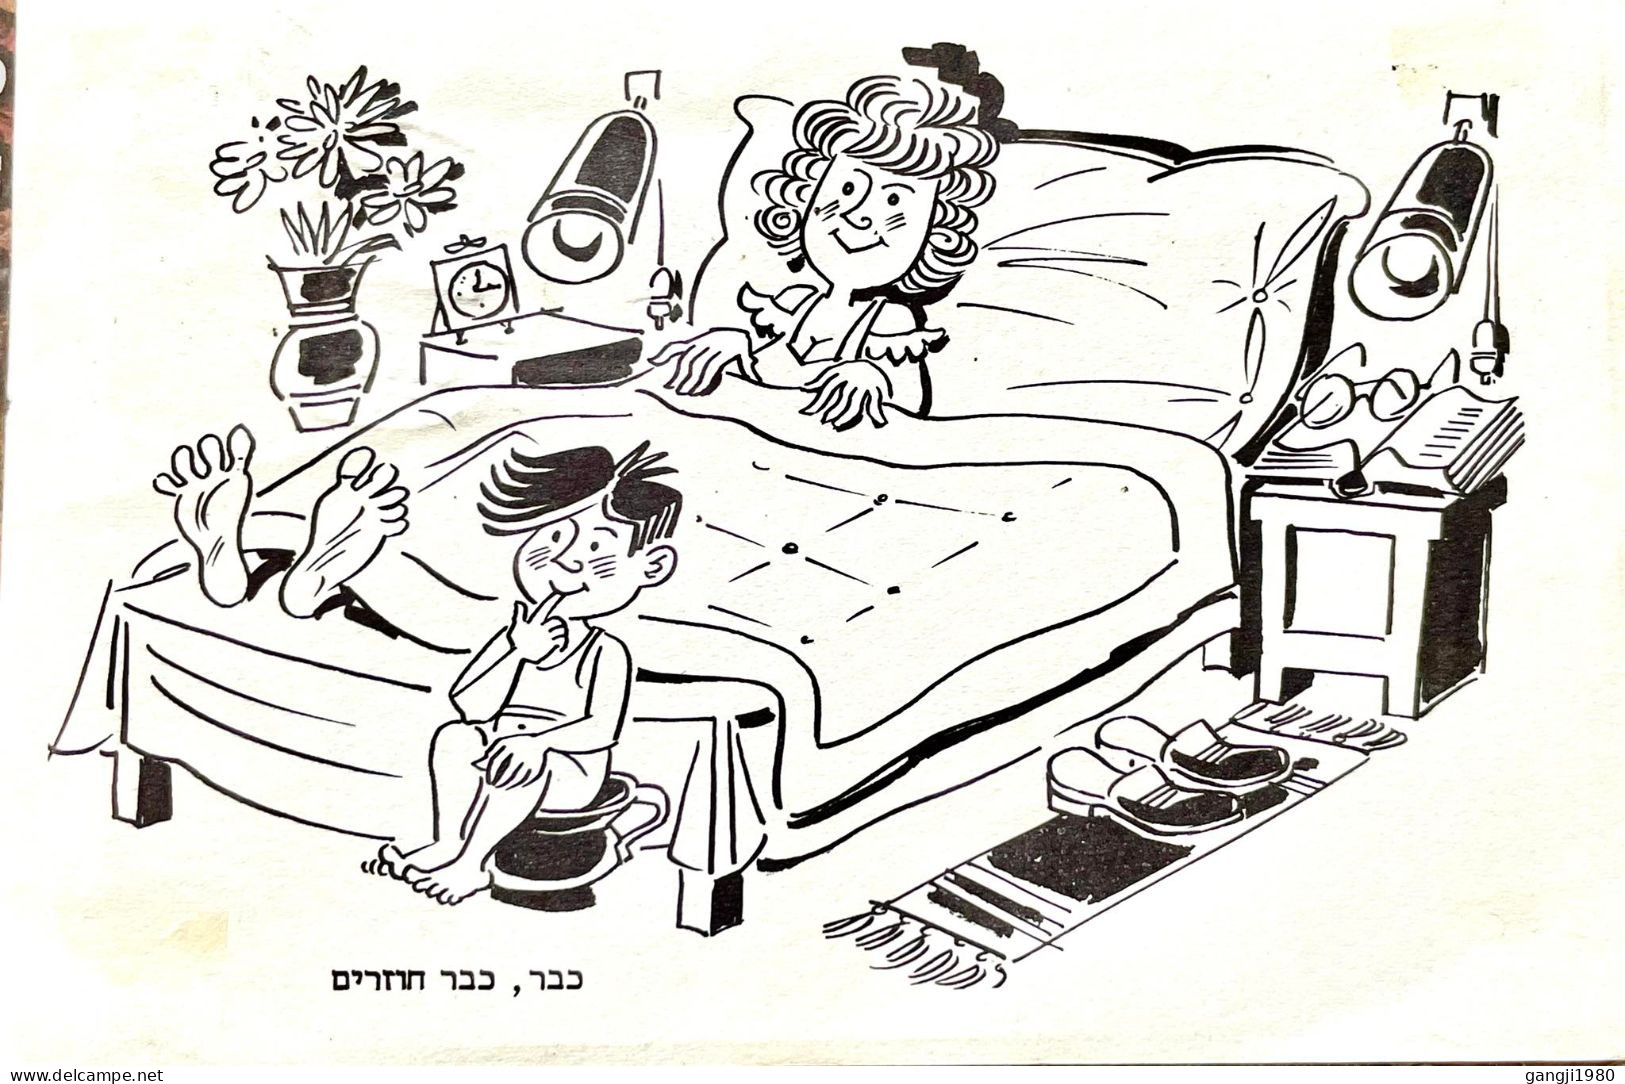 ISRAEL 1960, STUDY OR SLEEPING, HUMOR USED POSTCARD, COAT OF ARM STAMP WITH TAB, GAZA CITY CANCEL 2 LANGUAGE, - Storia Postale